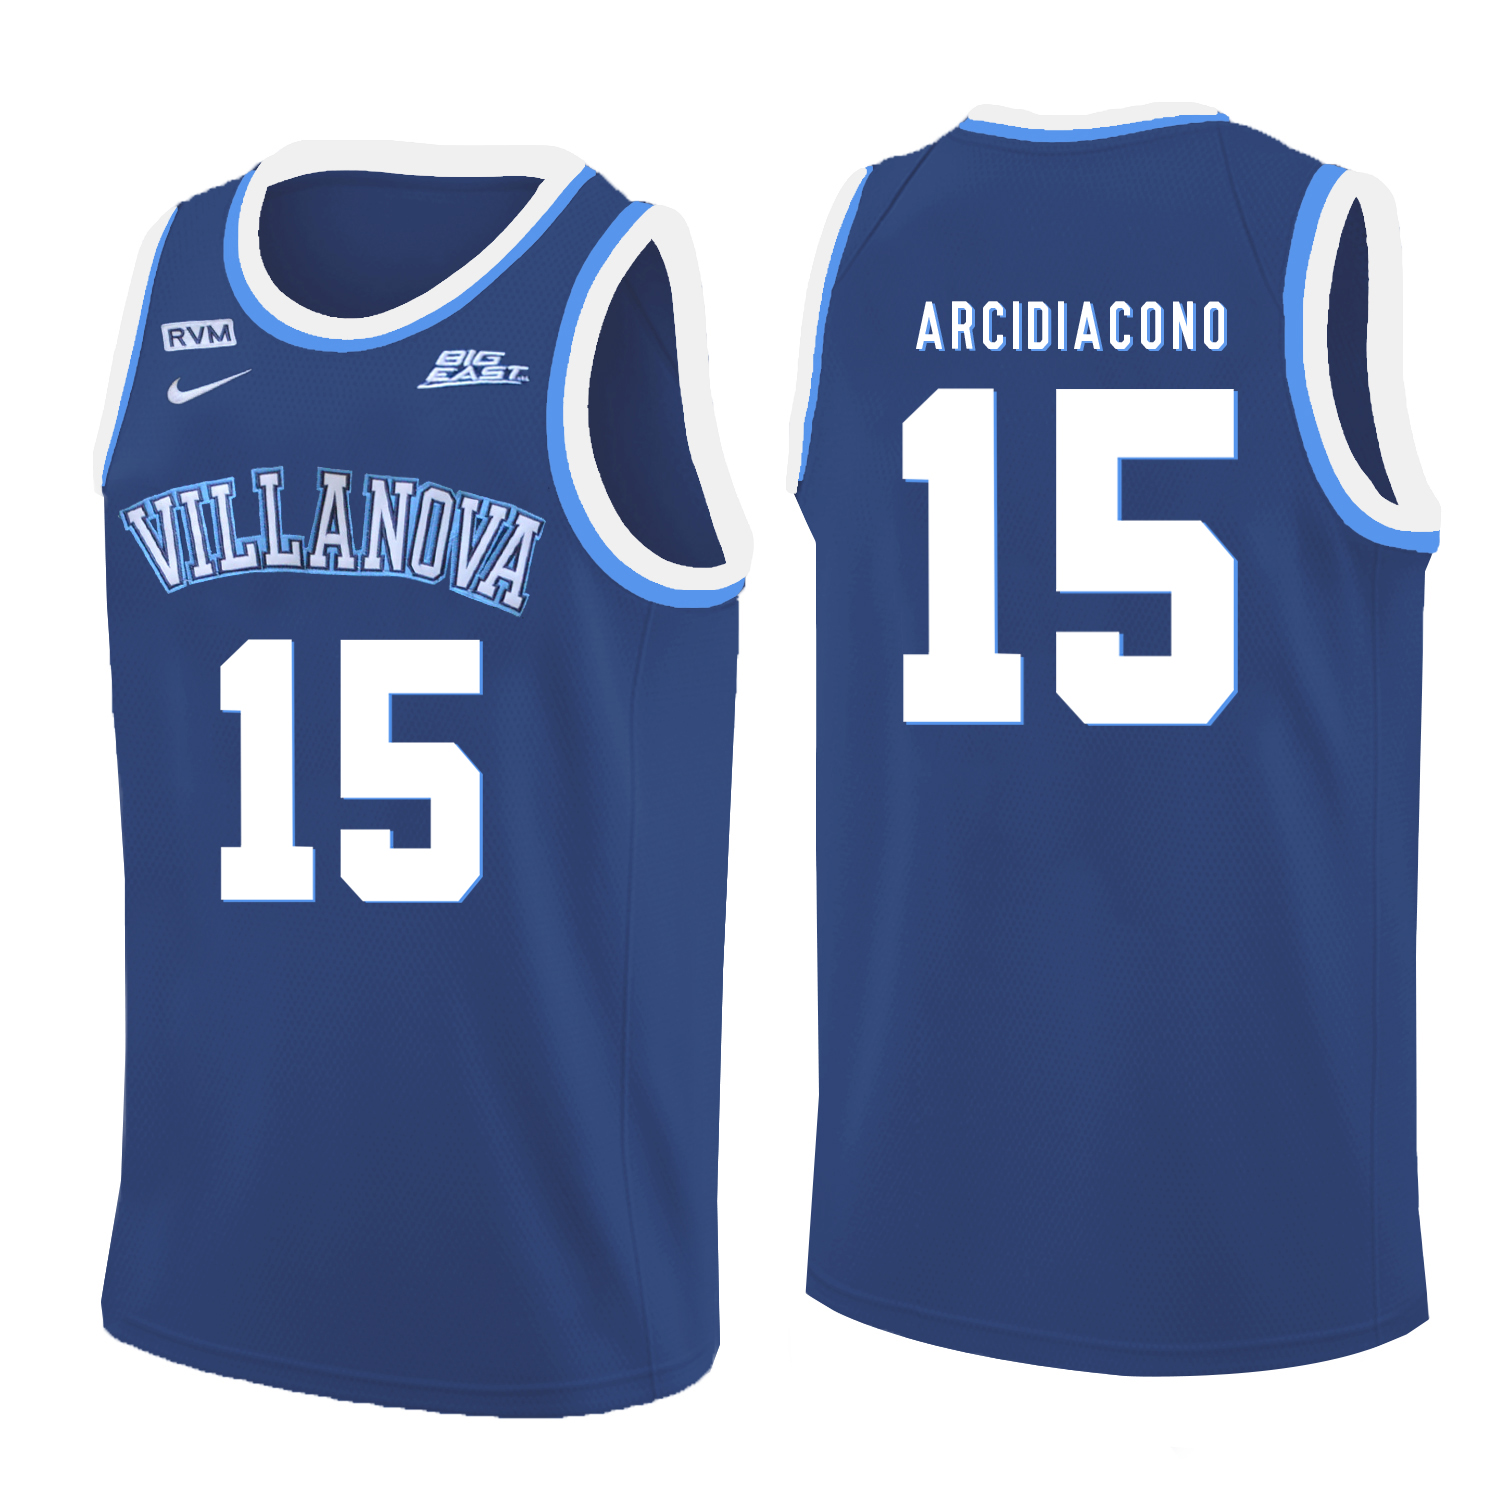 Villanova Wildcats 15 Ryan Arcidiacono Blue College Basketball Jersey